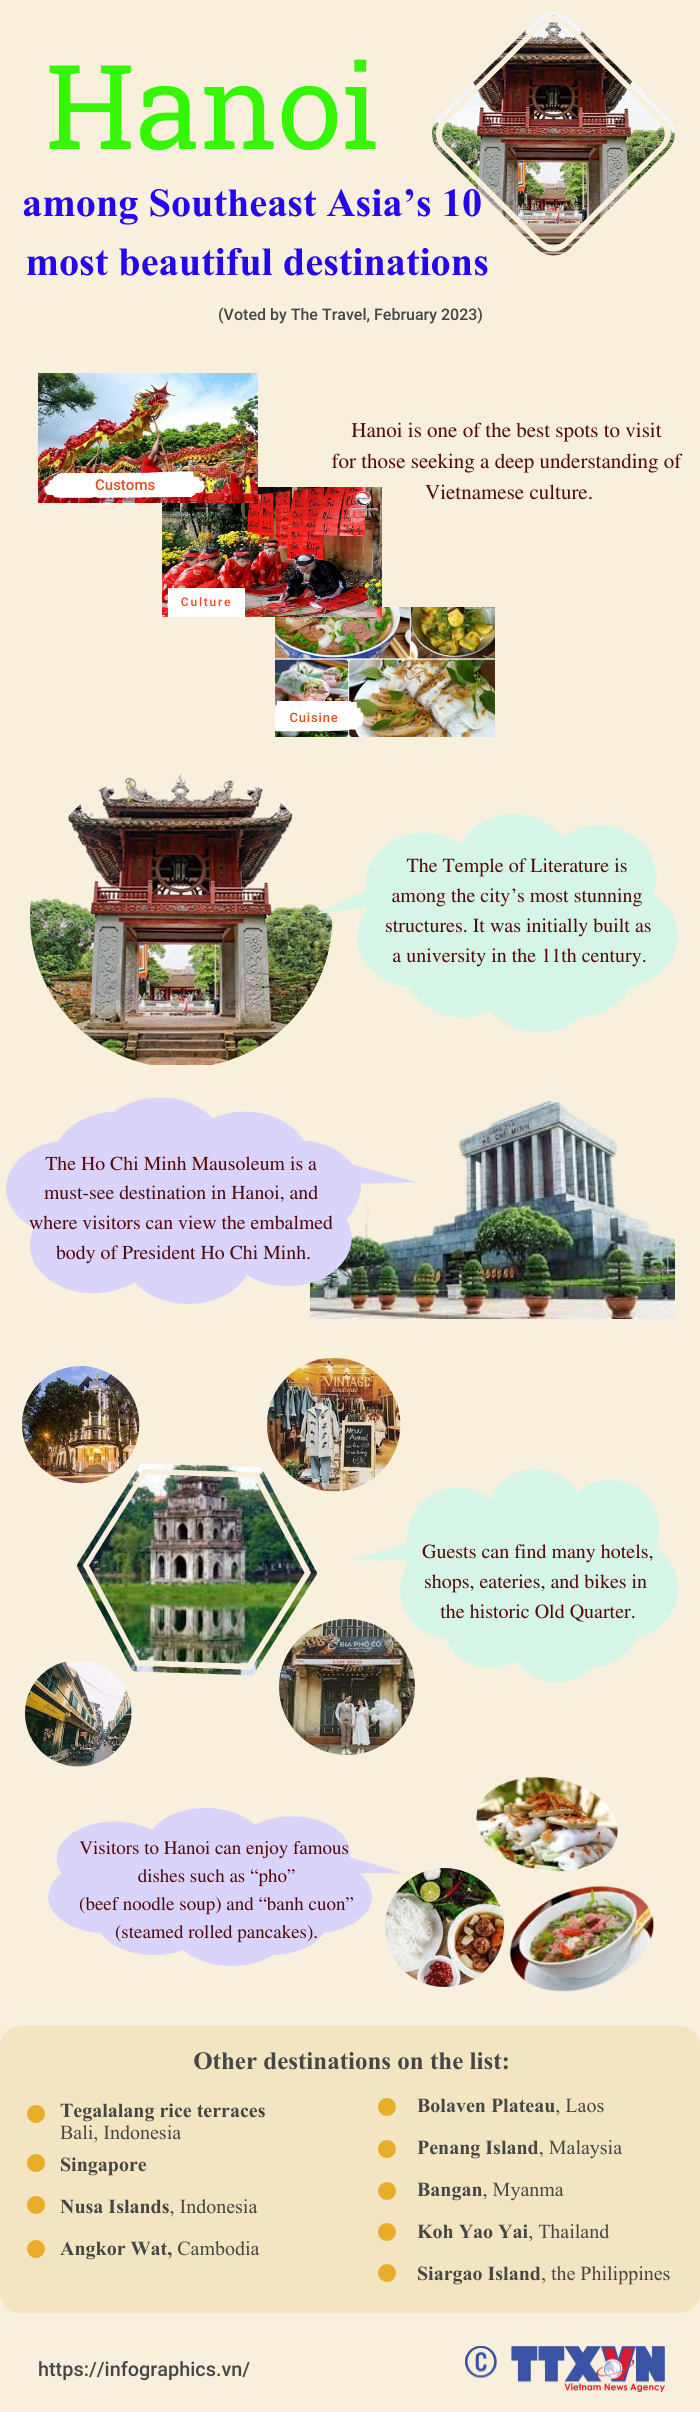 Hanoi among 10 most beautiful Southeast Asia destinations 